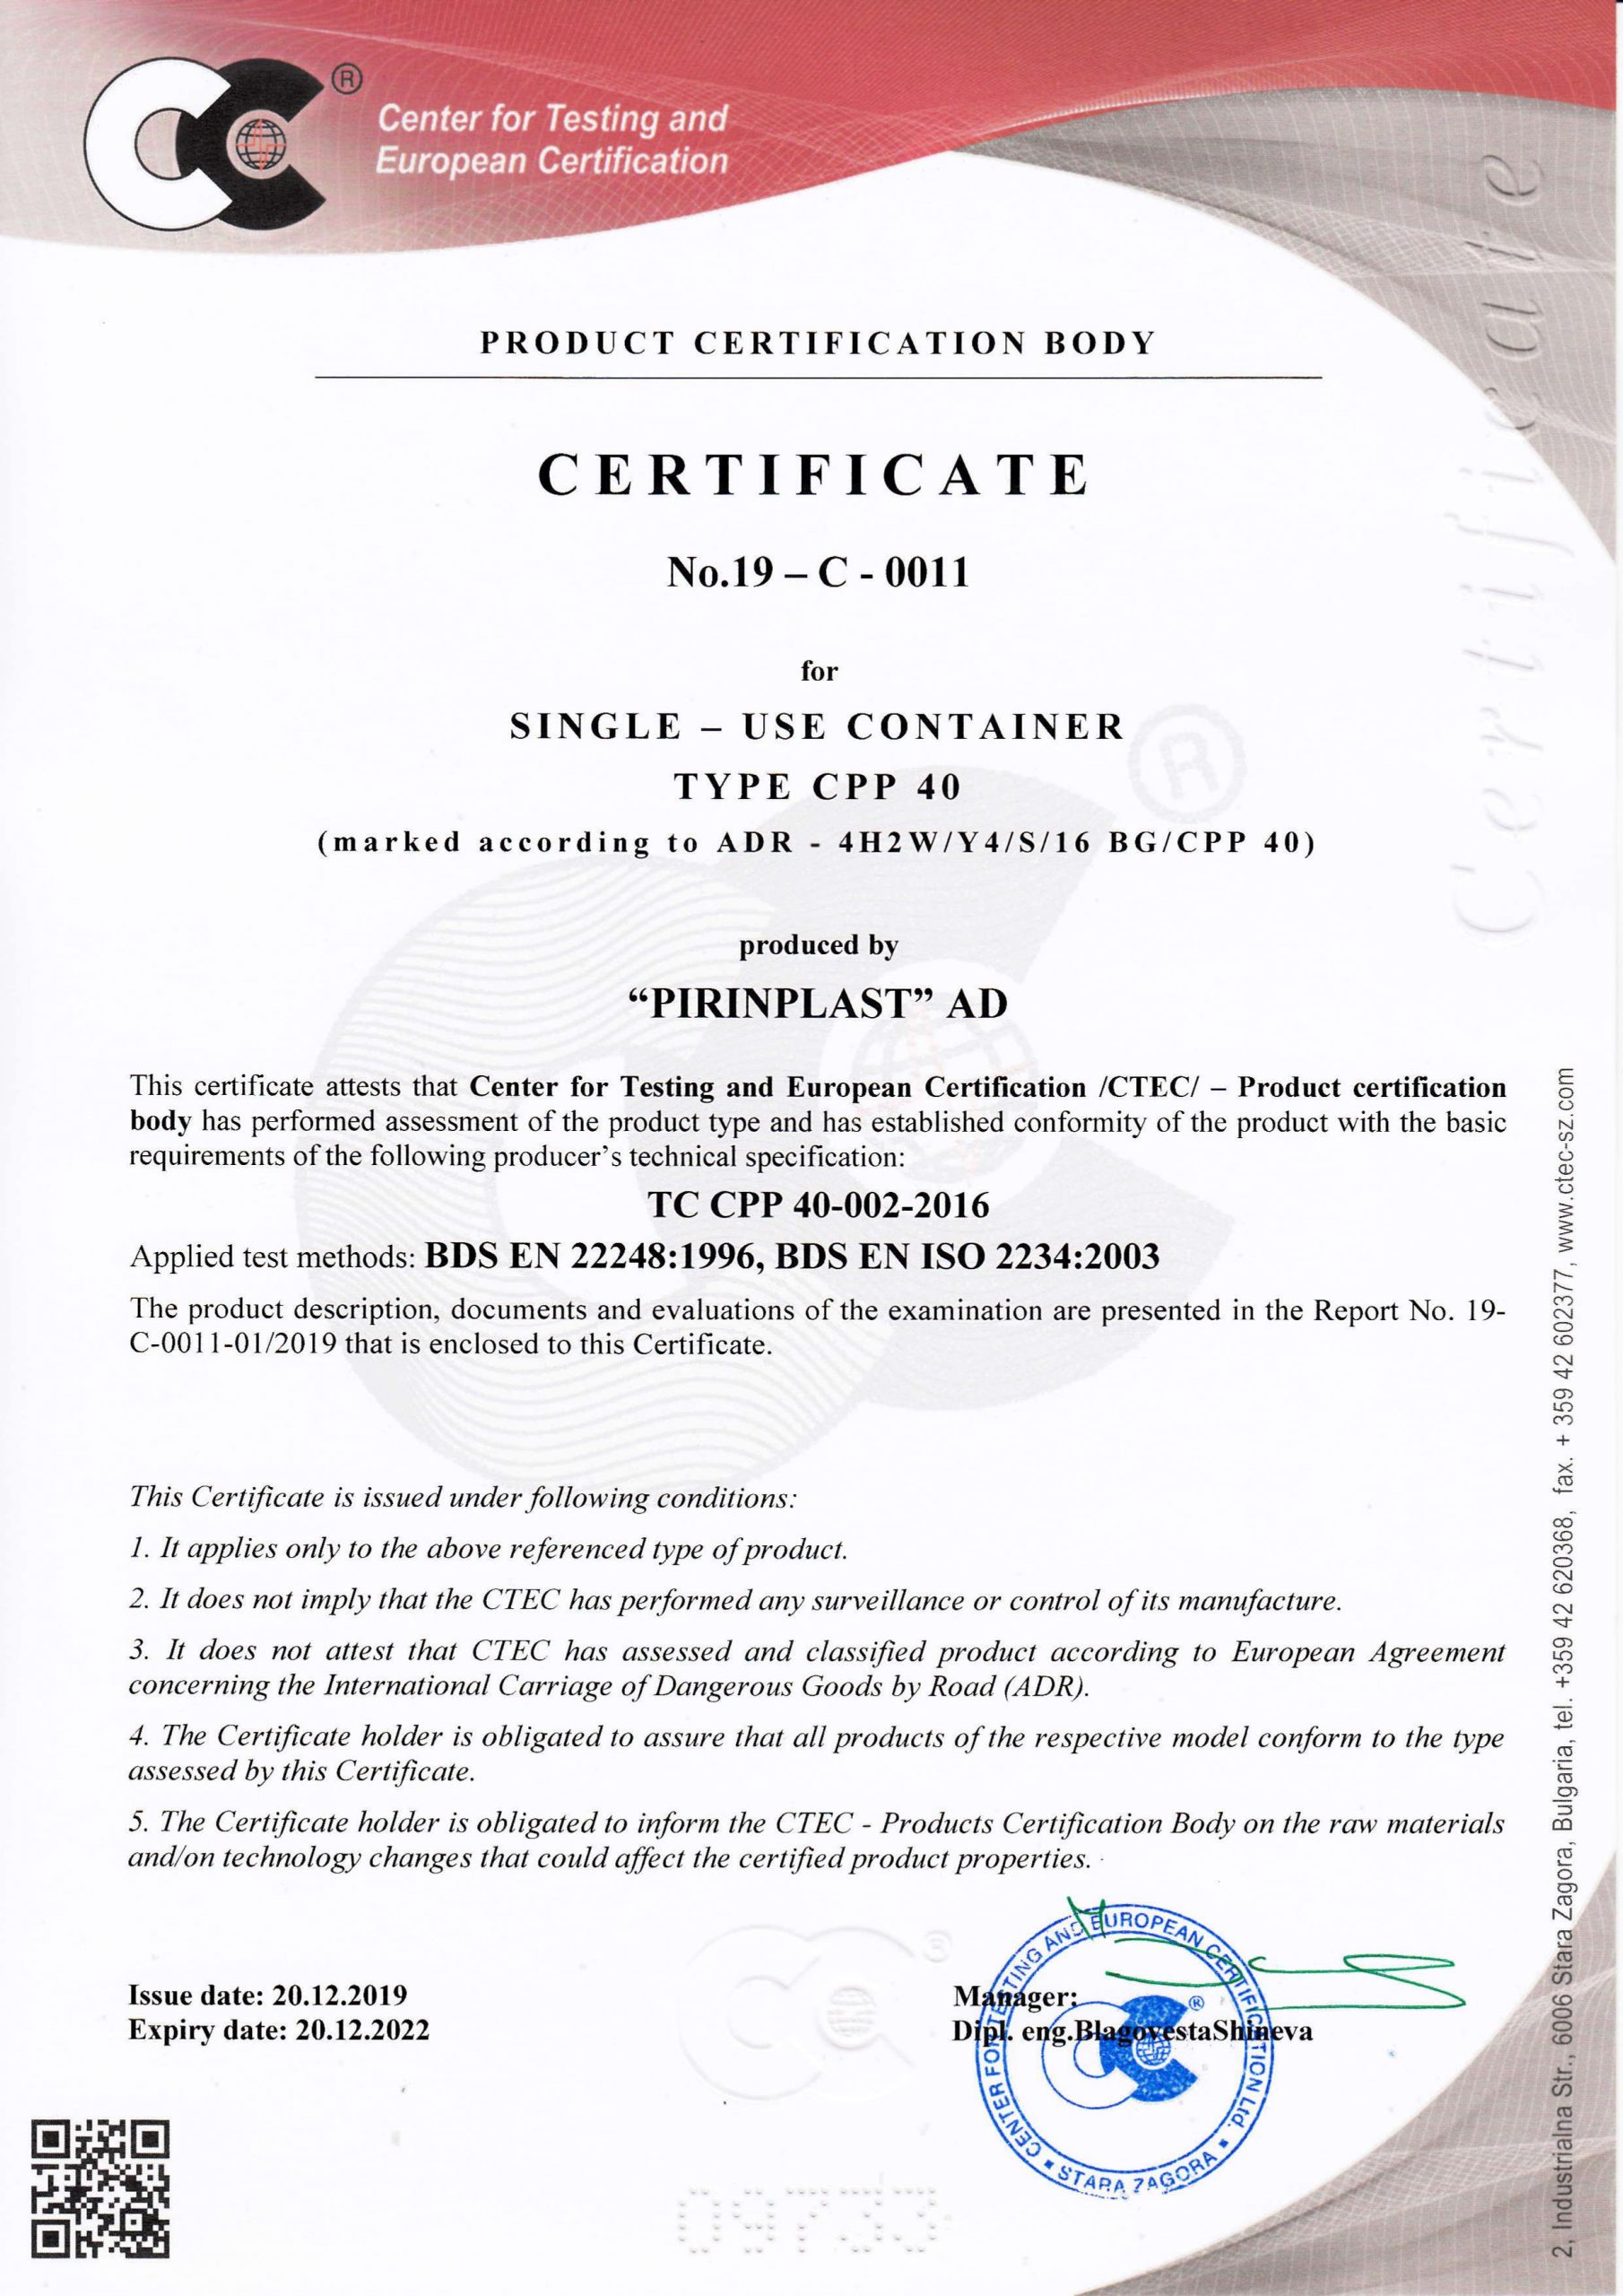 Certificate CRR 40-1